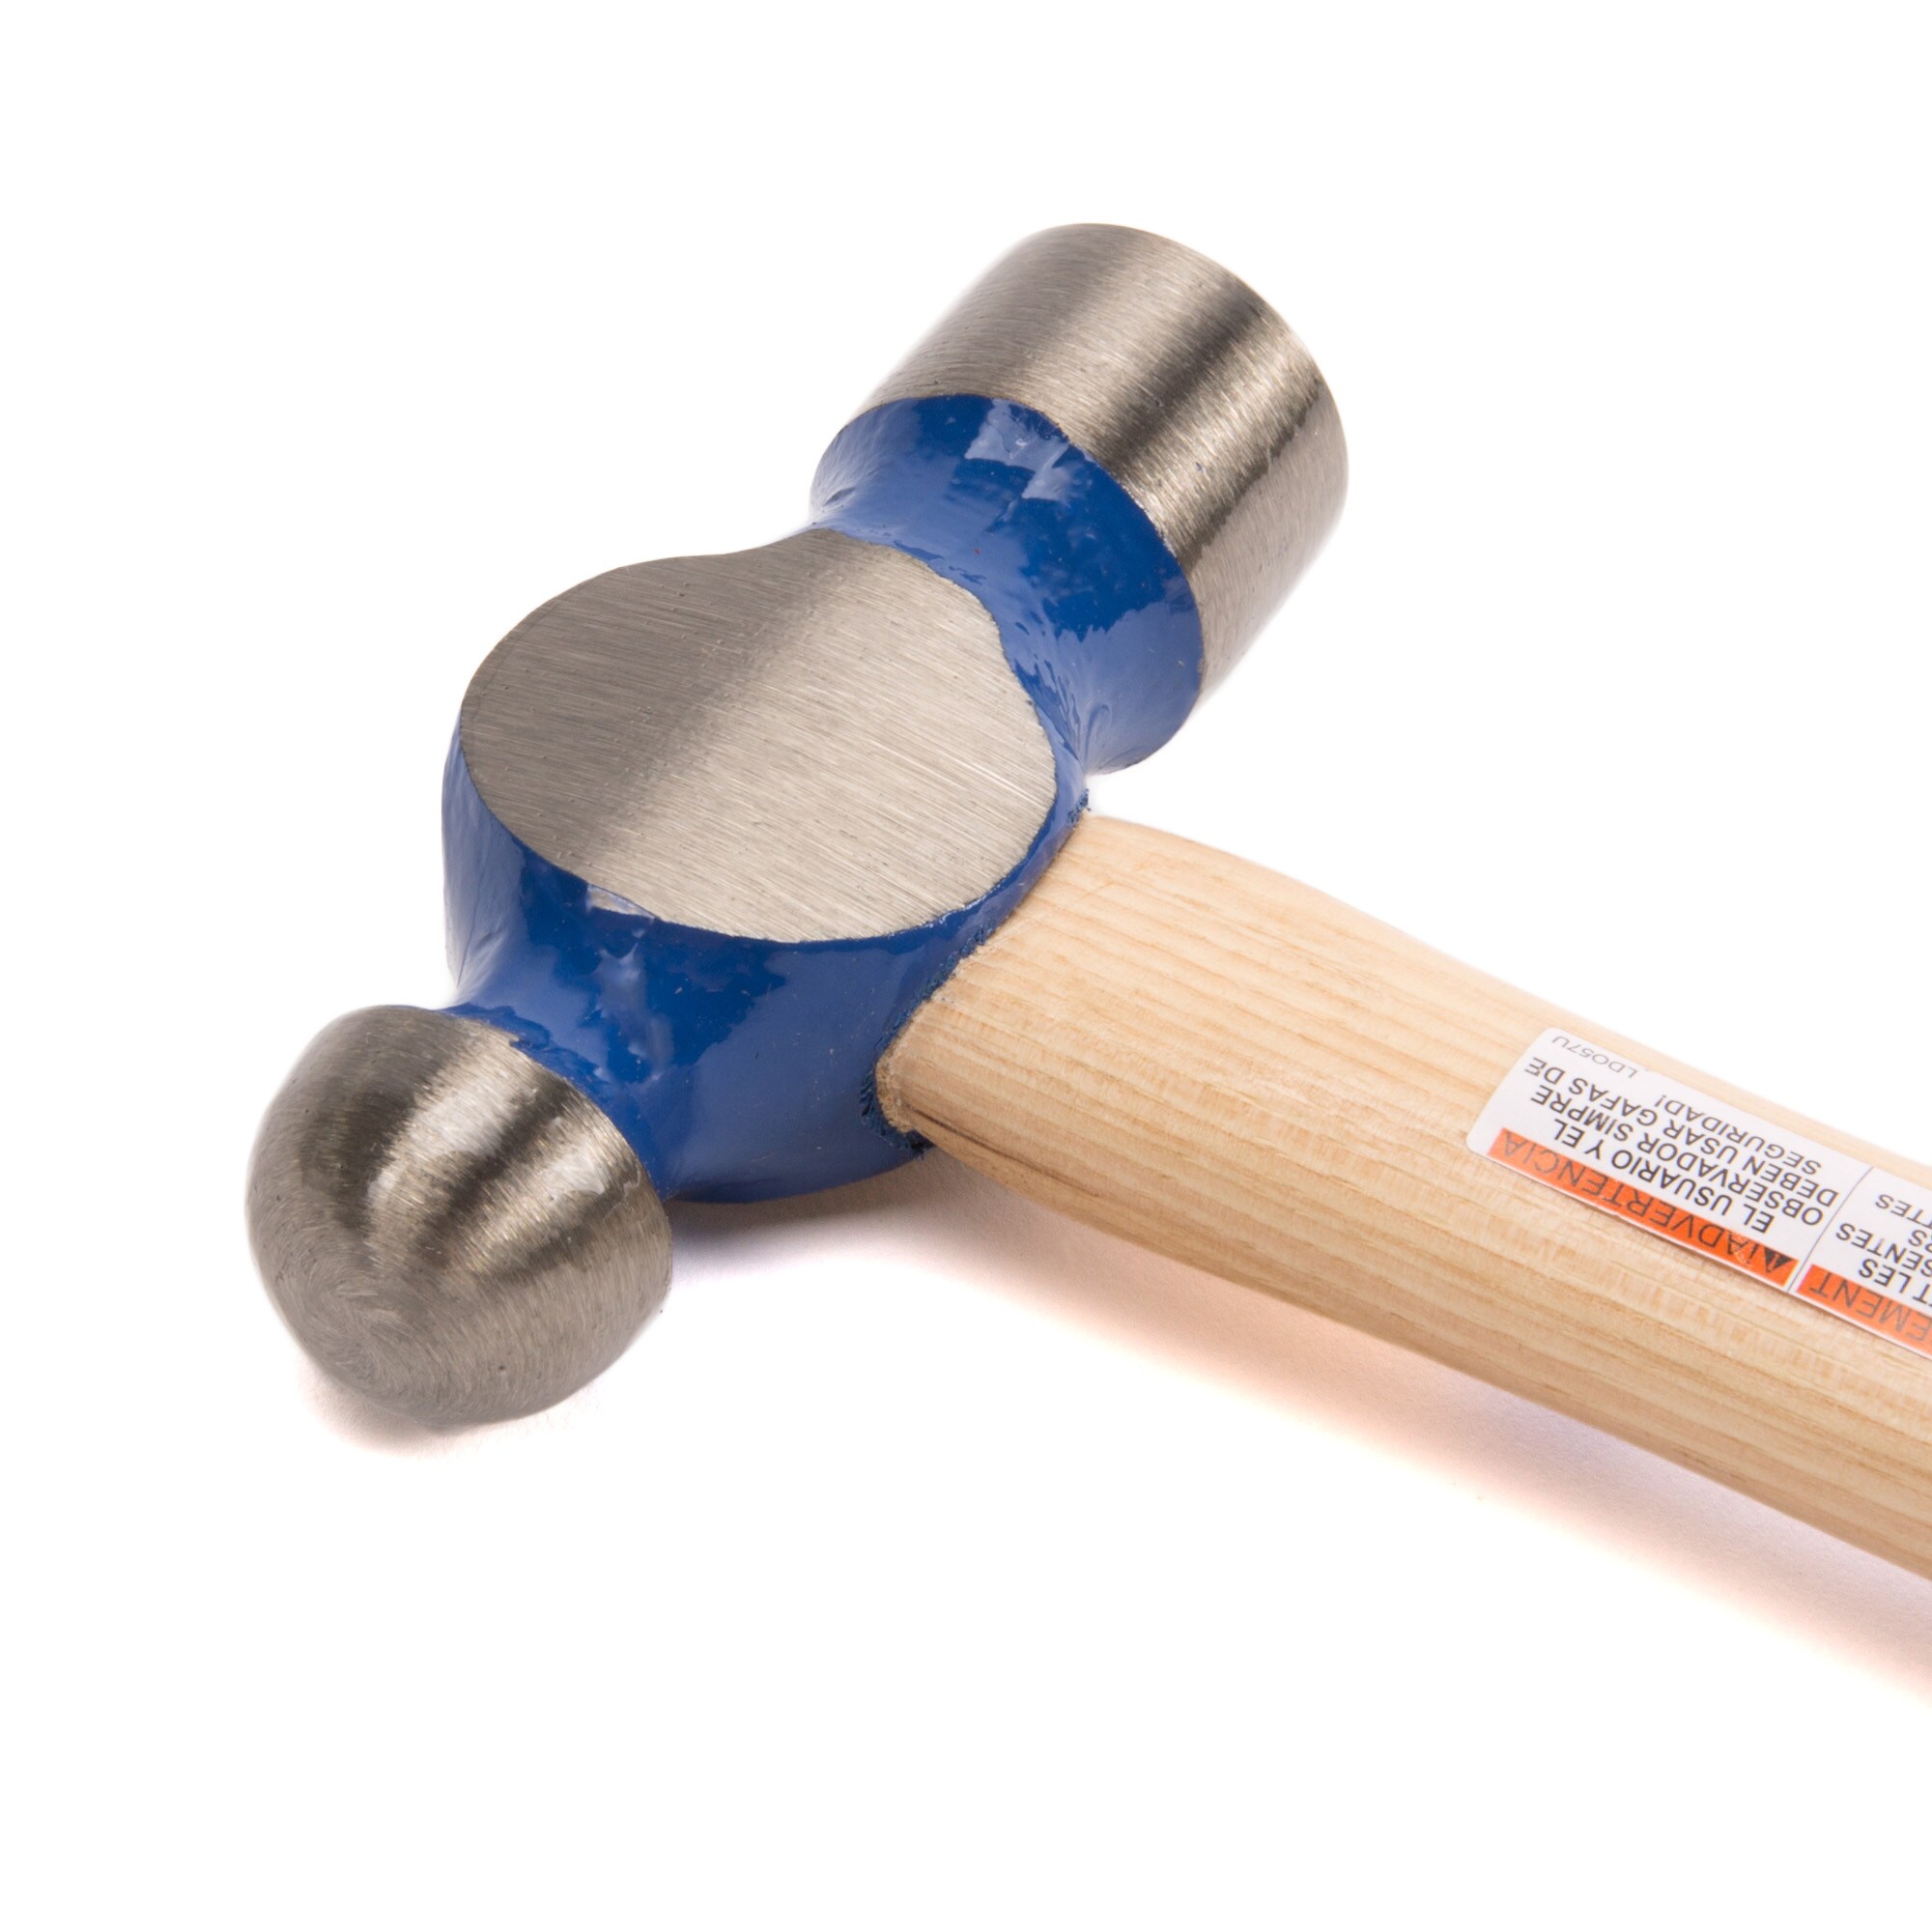 Wright Tool 9045 32 oz. Ball Peen Hammer, Fiberglass Handle